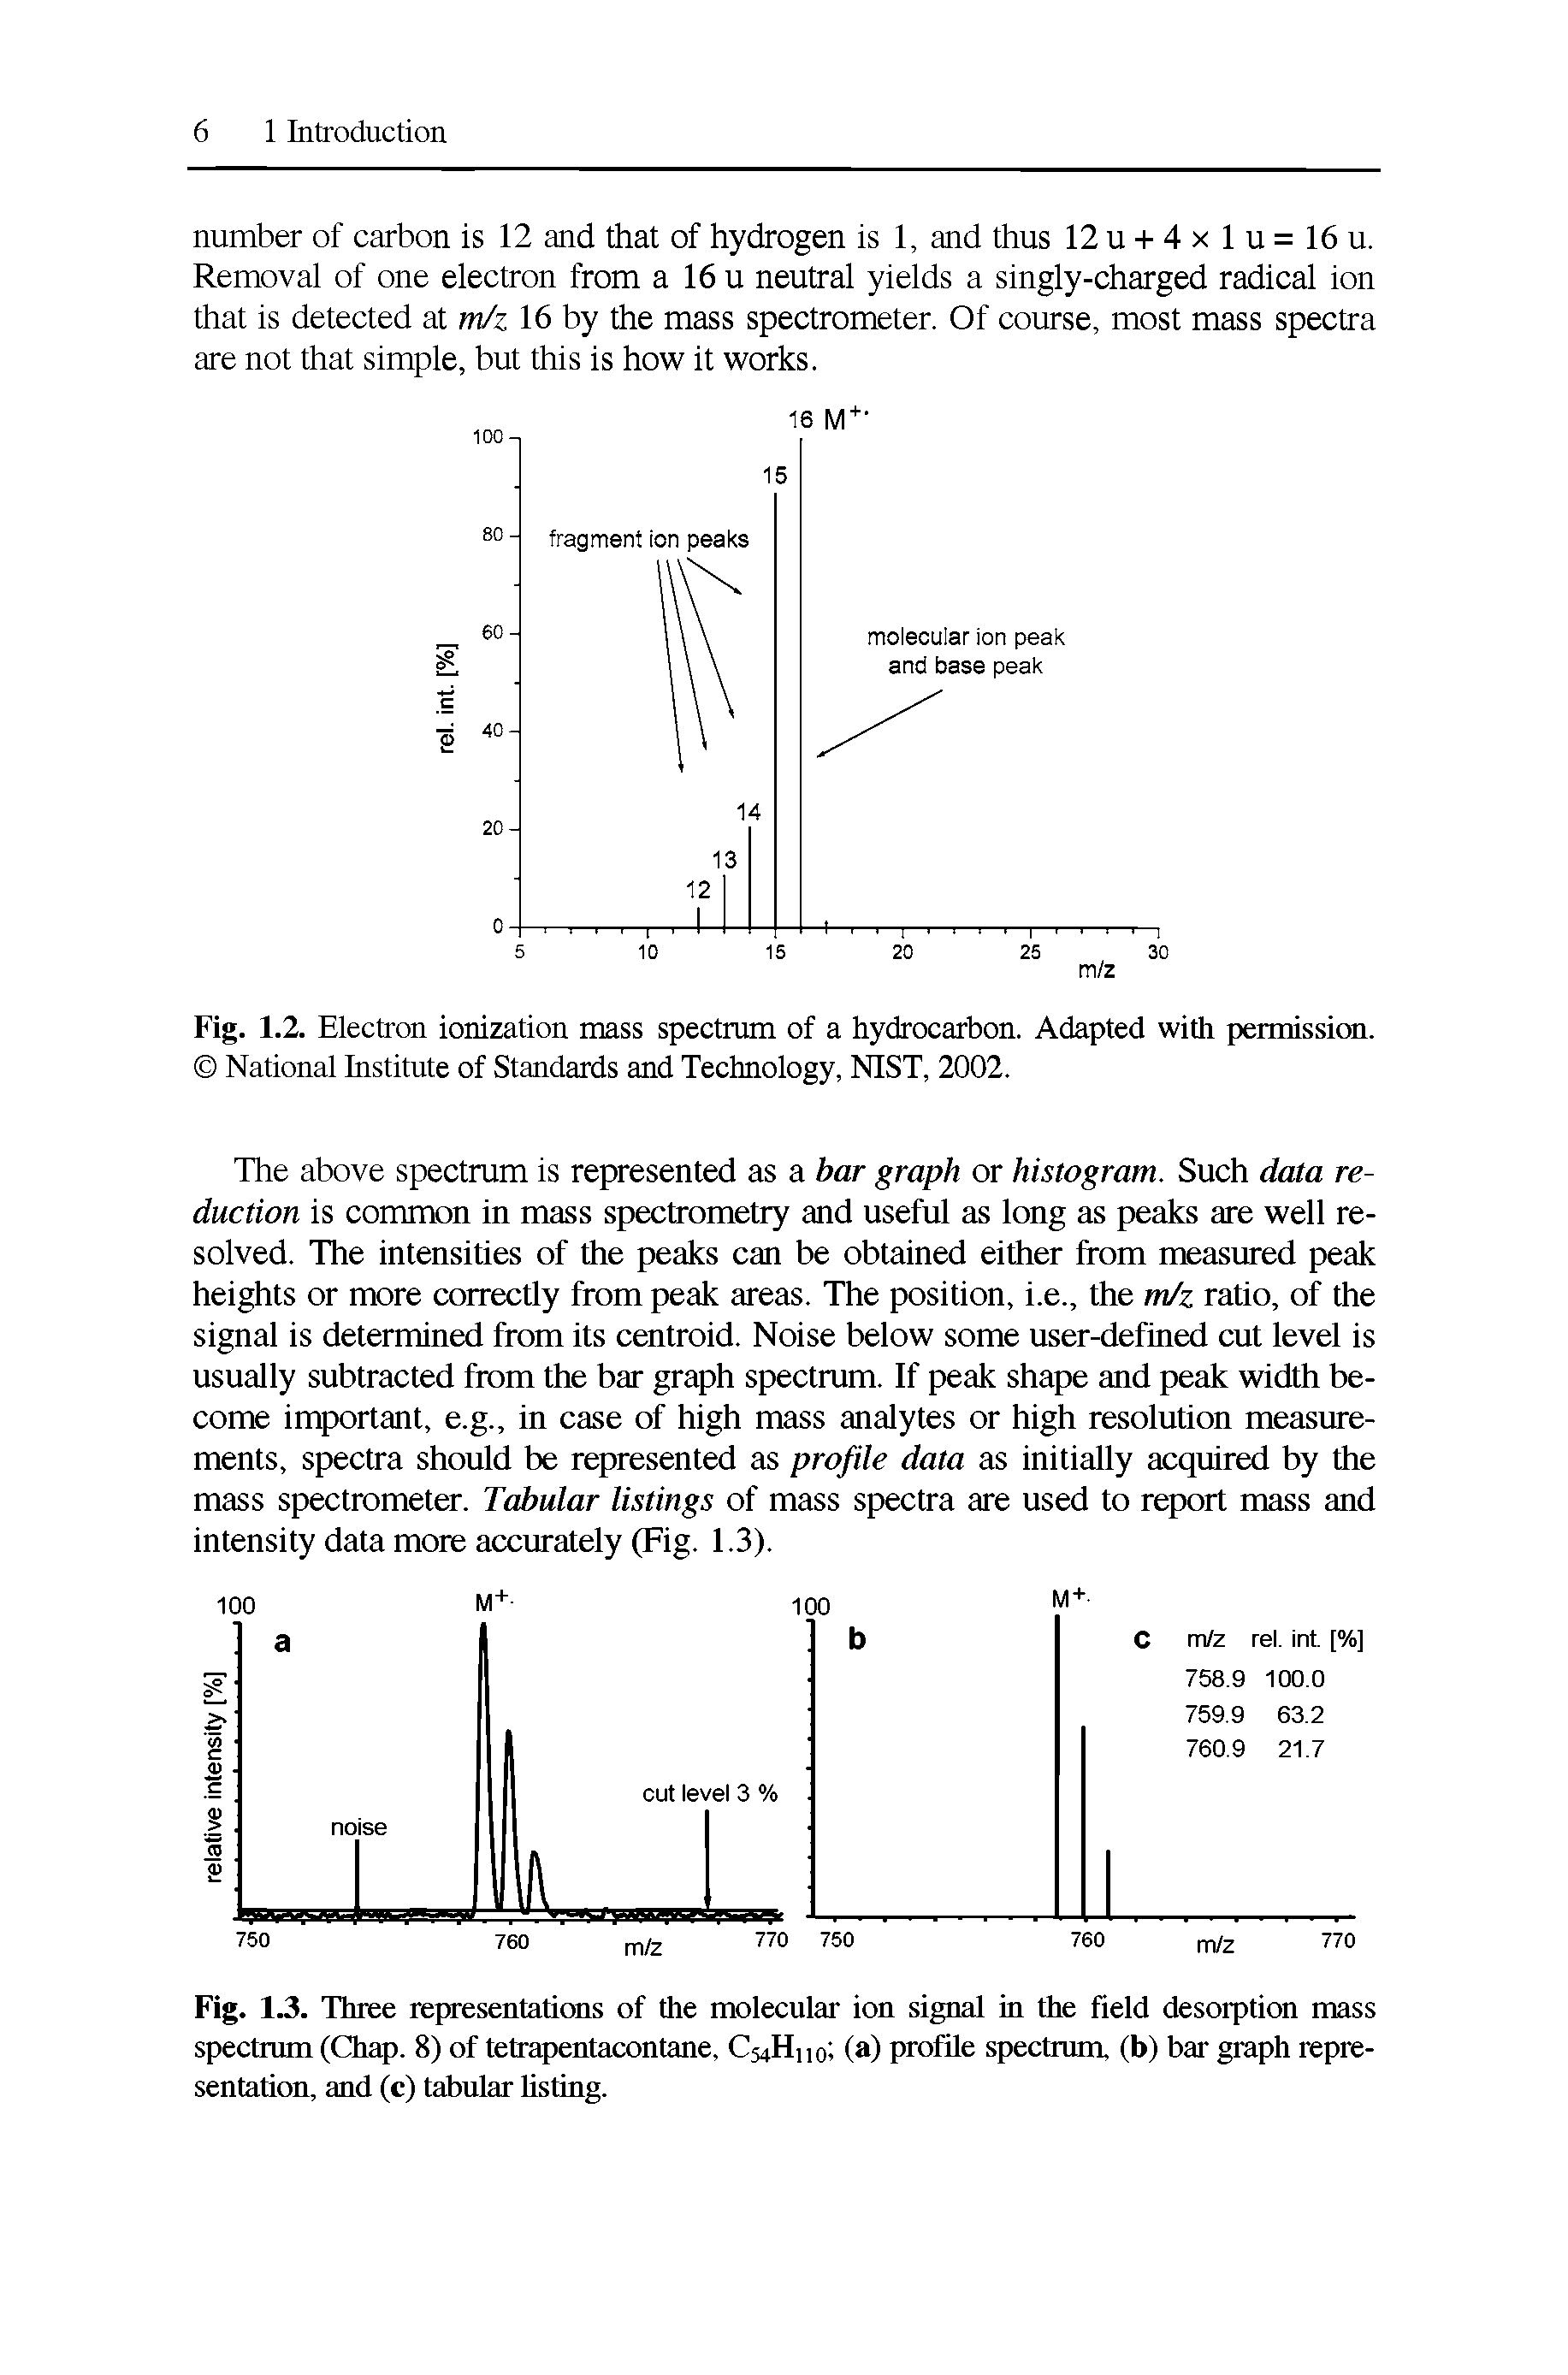 Fig. 1.3. Three representations of the molecular ion signal in the field desorption mass spectrum (Chap. 8) of tetrapentacontane, C54H110 (a) profile spectrum, (b) bar graph representation, and (c) tabular listing.